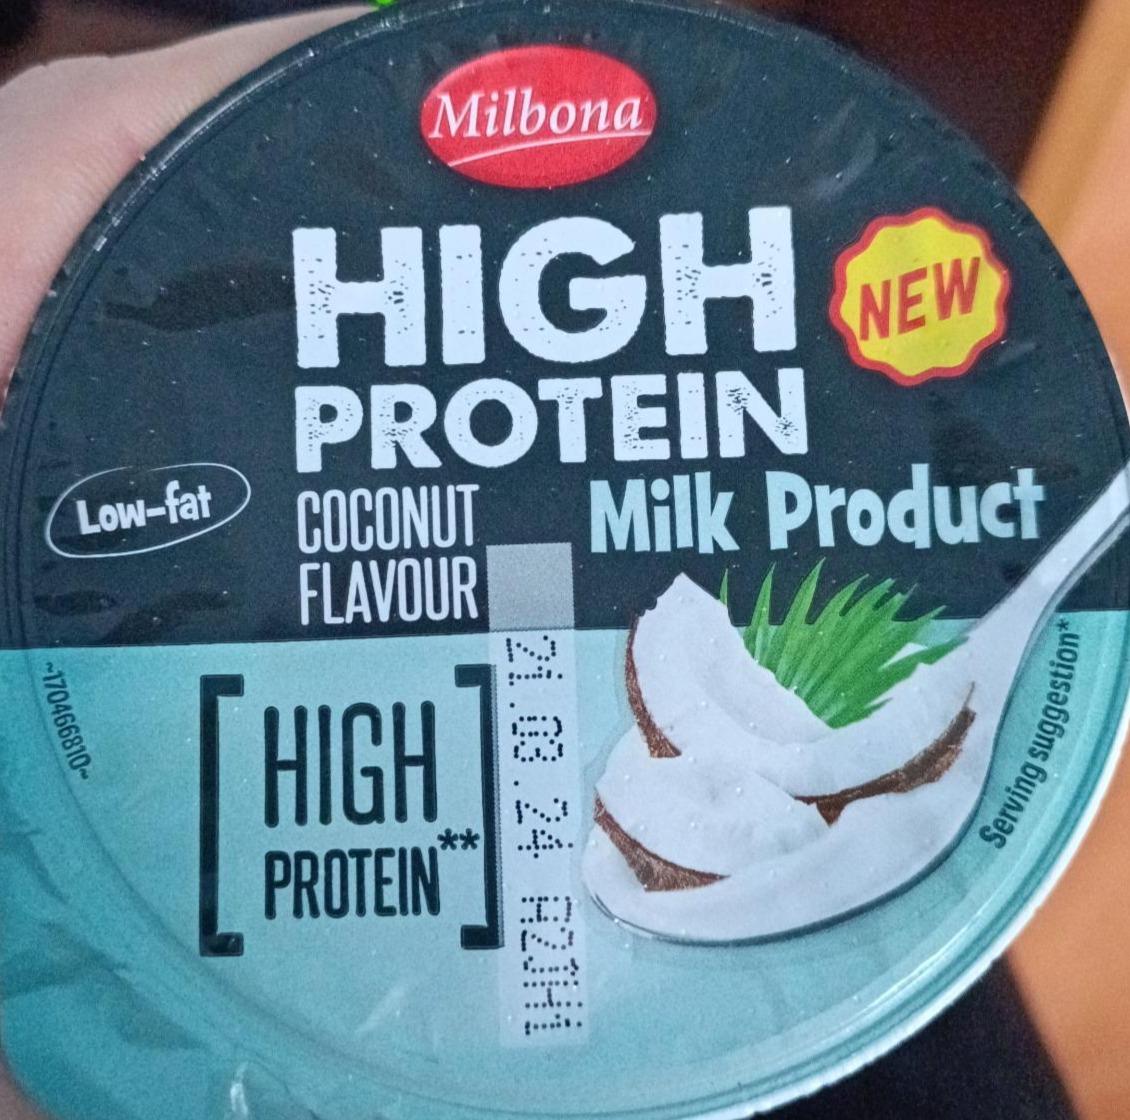 Képek - High protein milk product Milbona